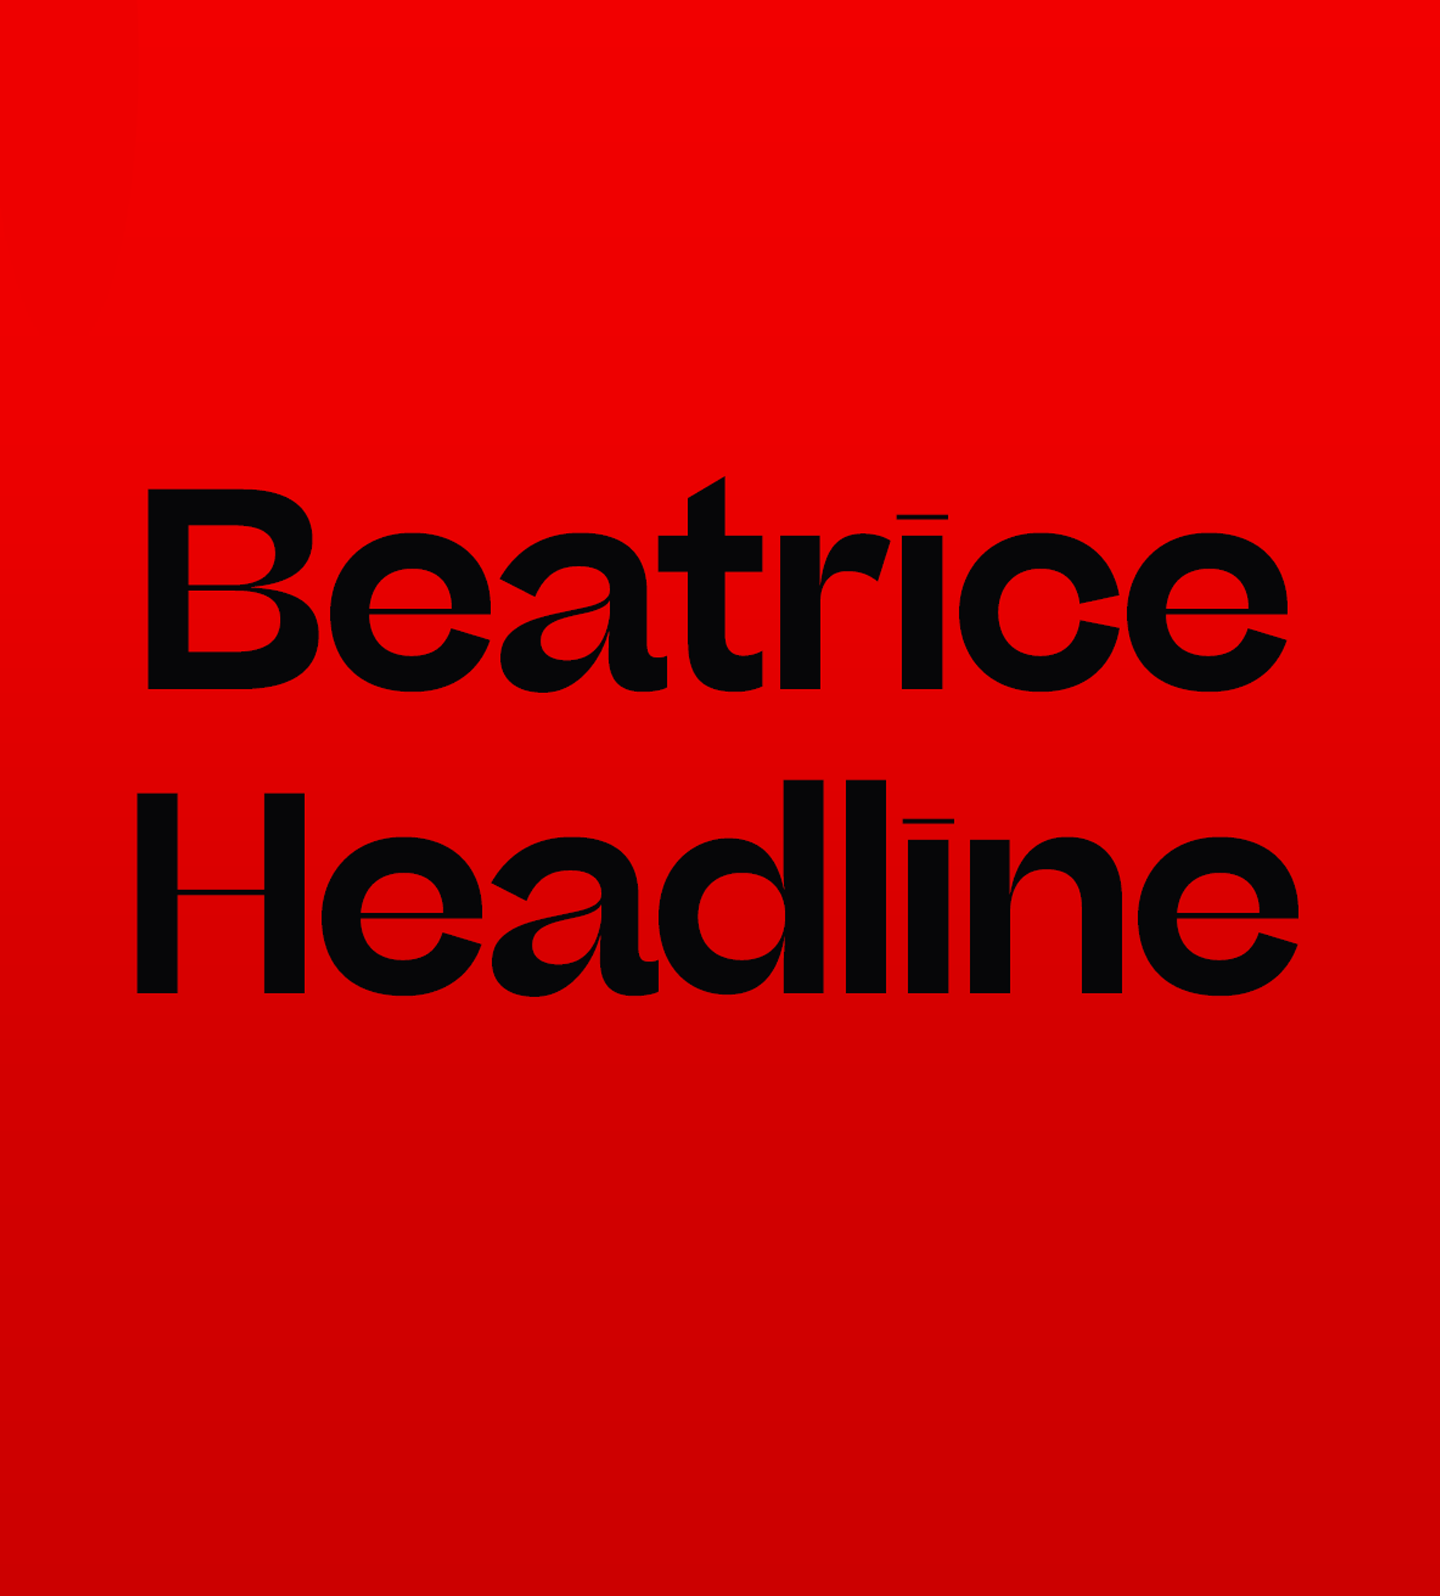 Beatrice Headline Semibold Font preview